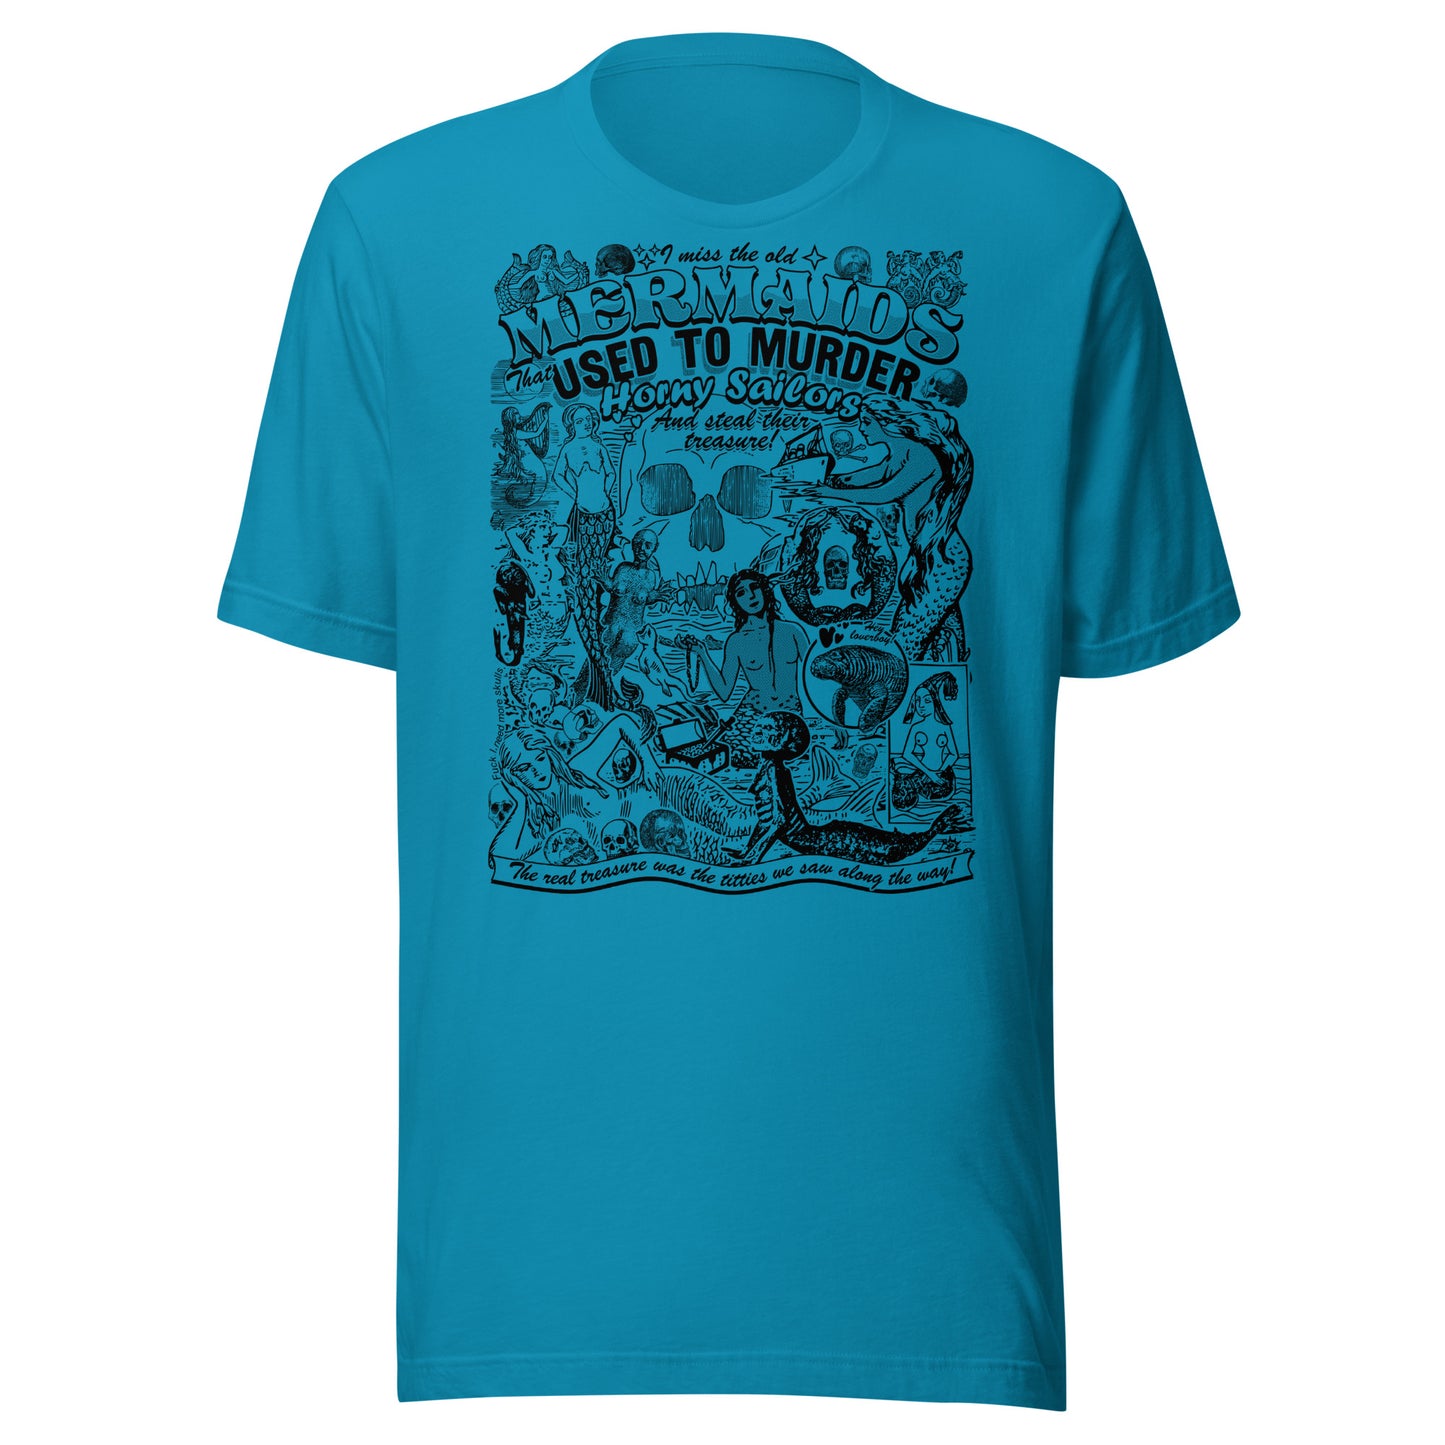 "I Miss the Old Mermaids" Unisex t-shirt